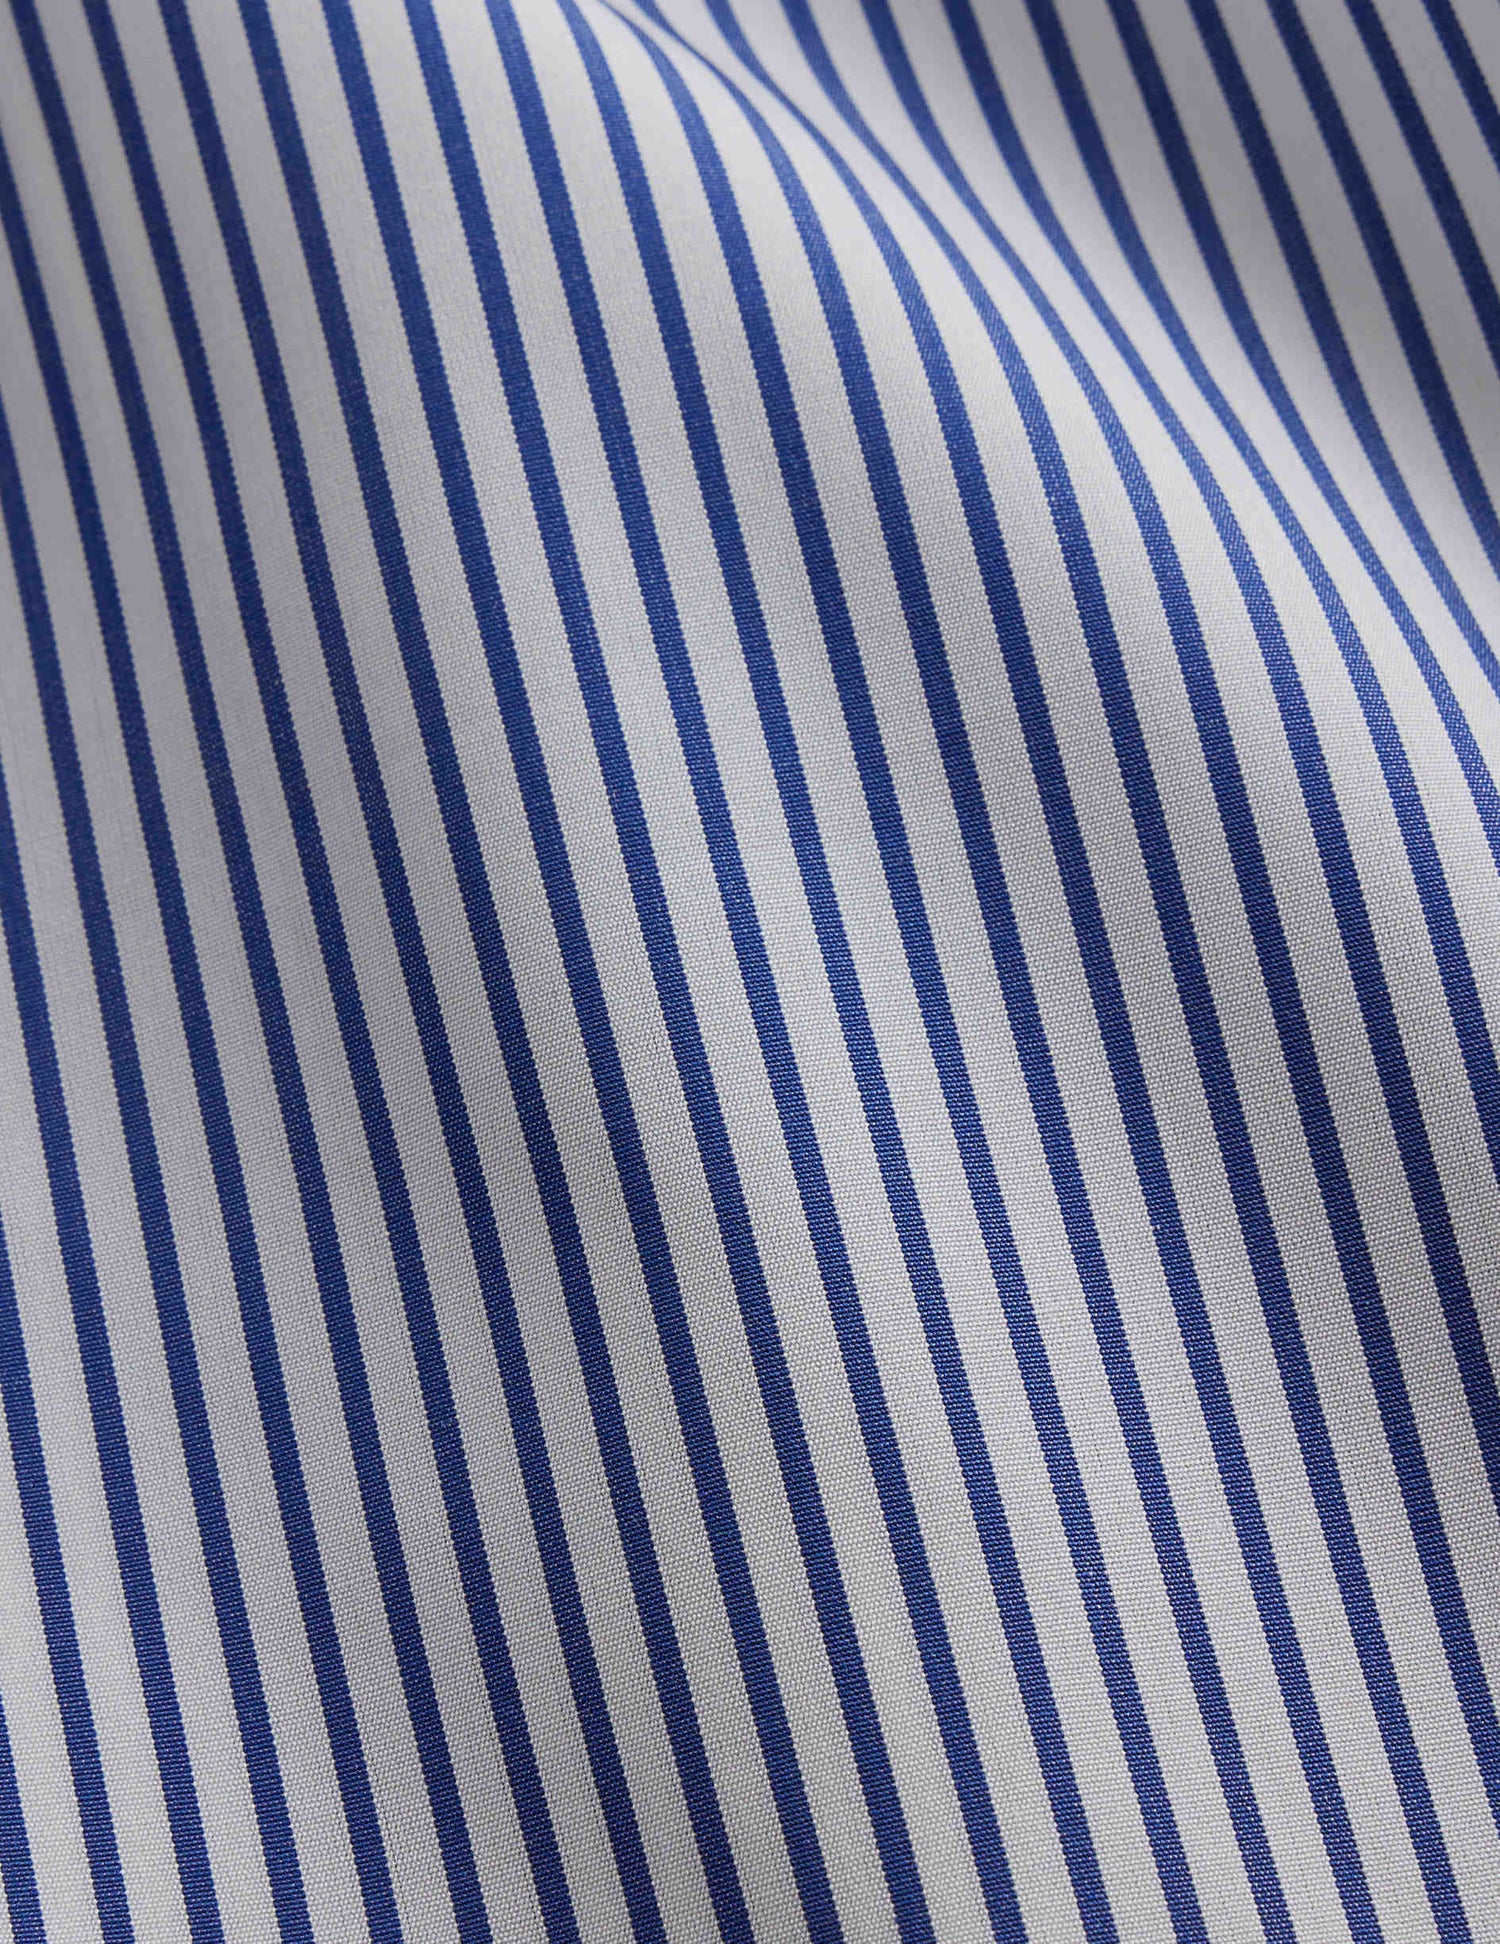 Chemise semi-ajustée infroissable rayée bleu marine - Popeline - Col Italien#2